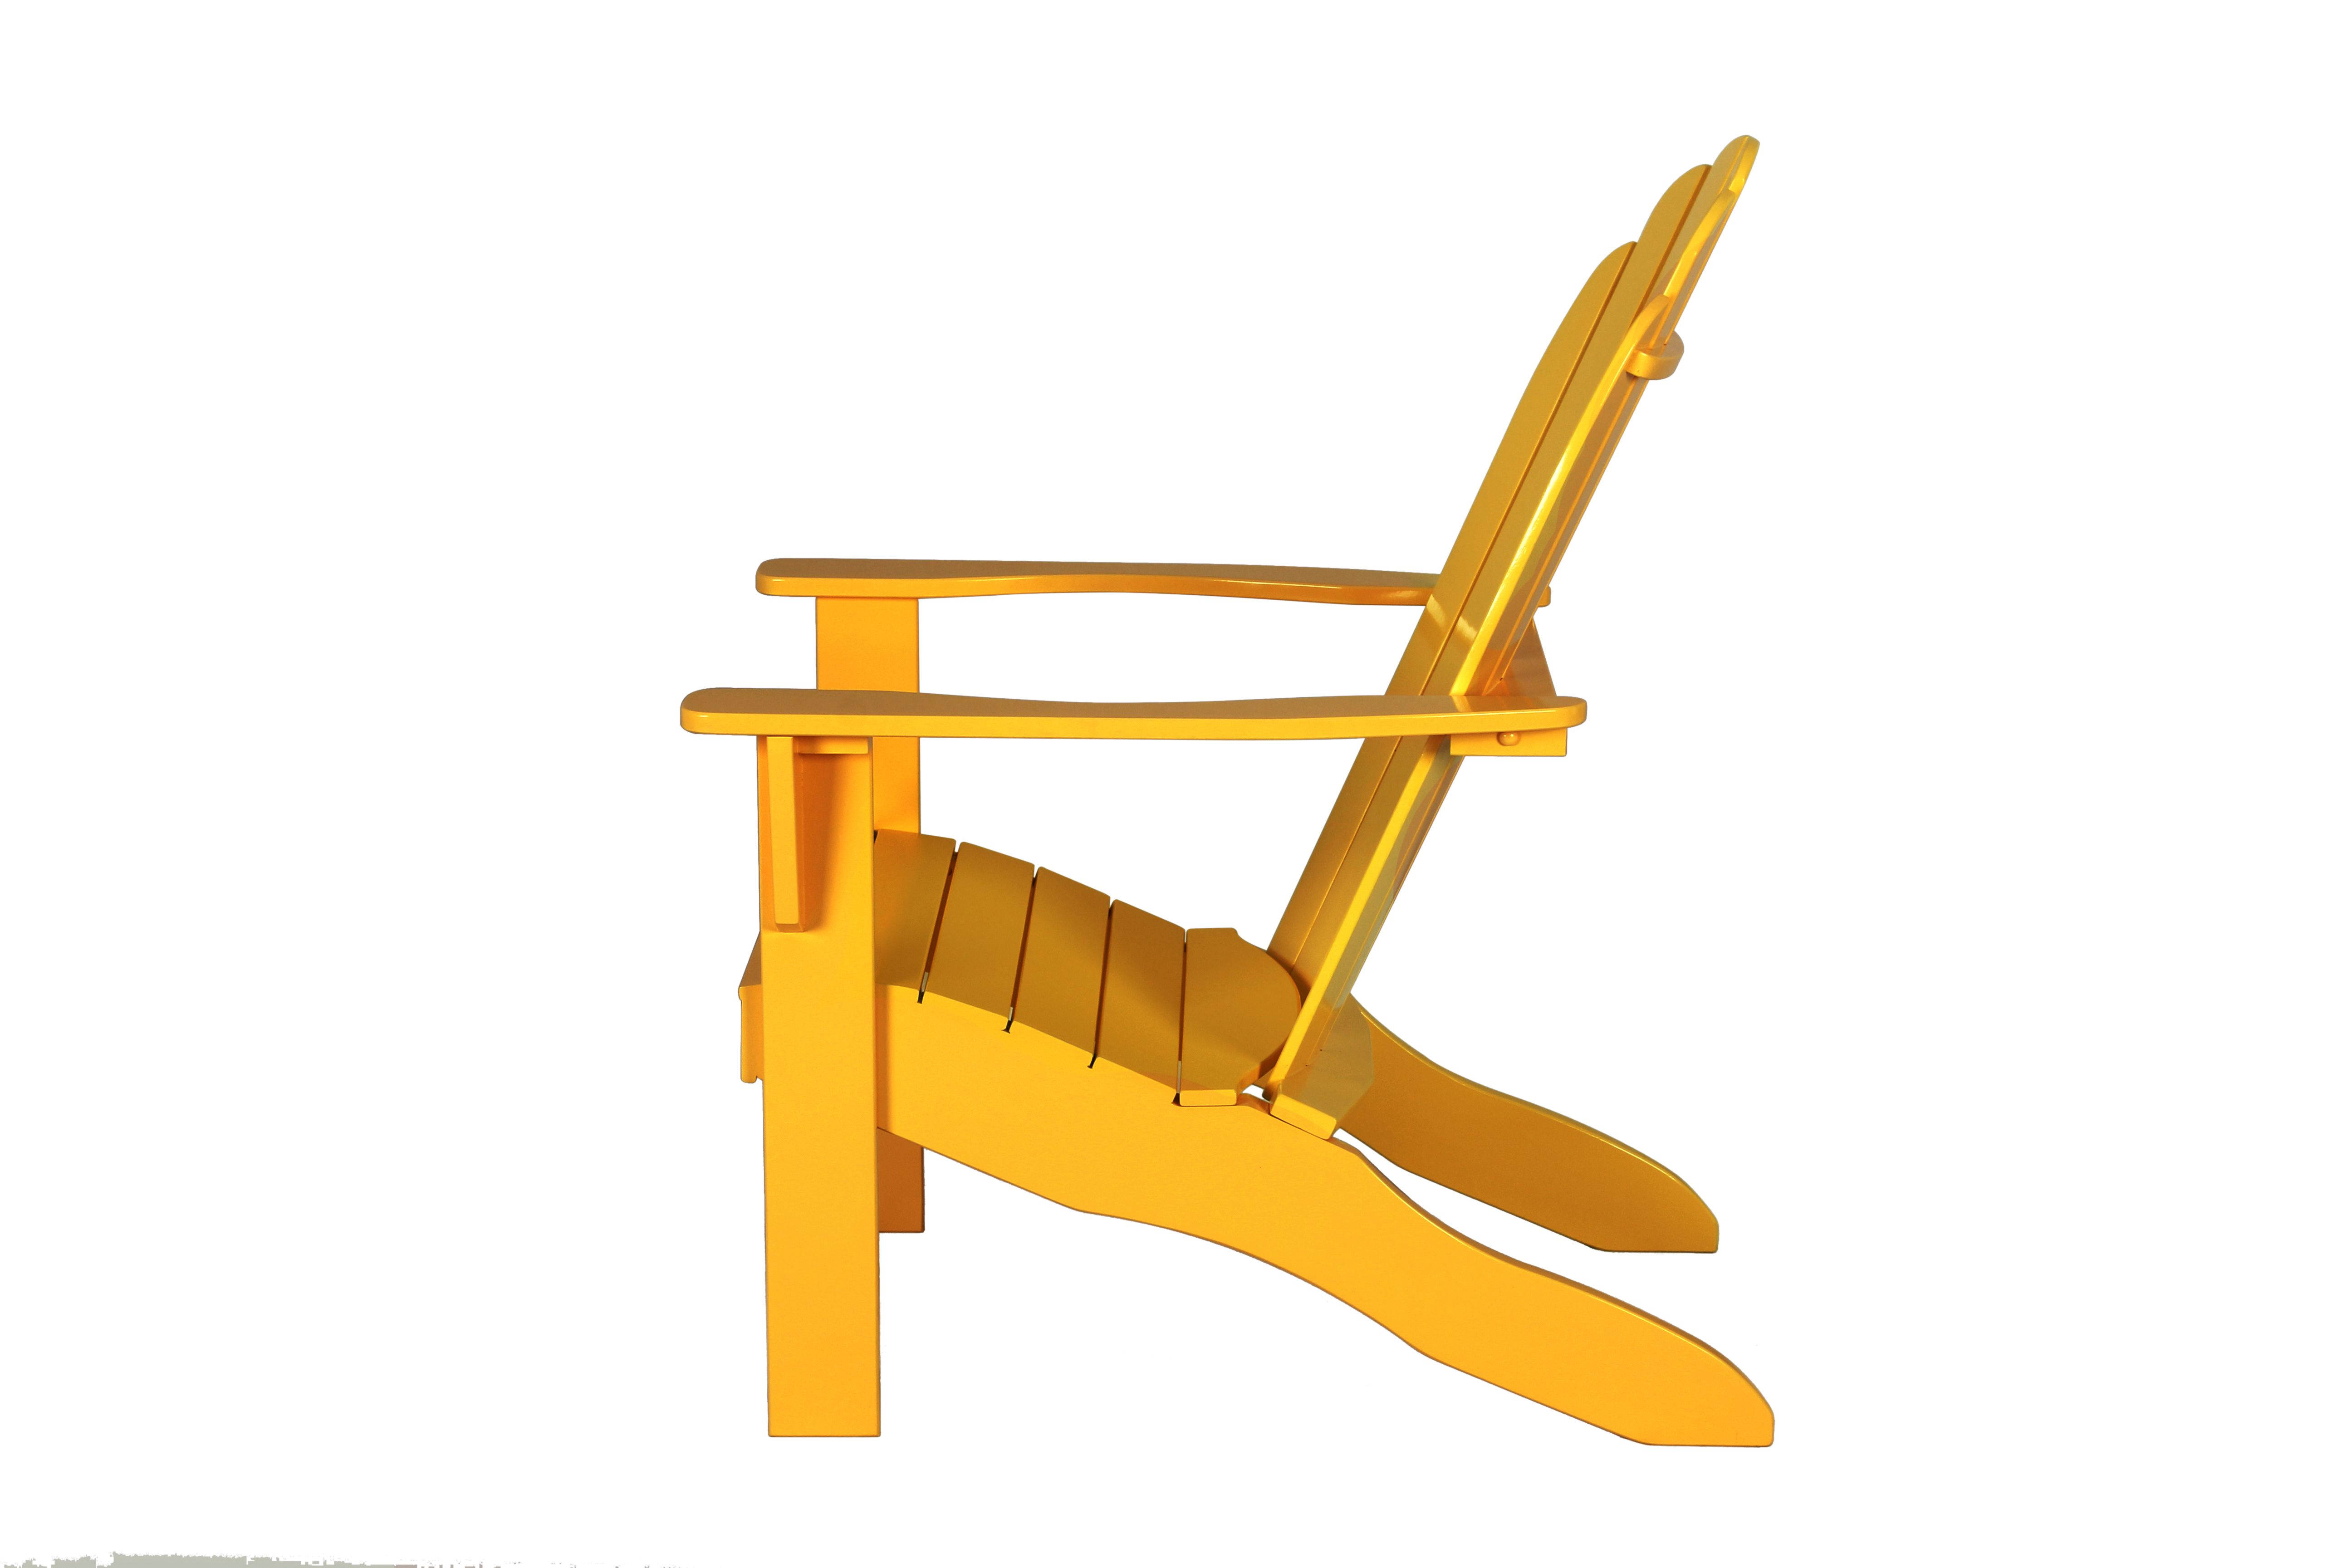 Mainstays Hardwood Adirondack Chair - Yellow - image 3 of 8